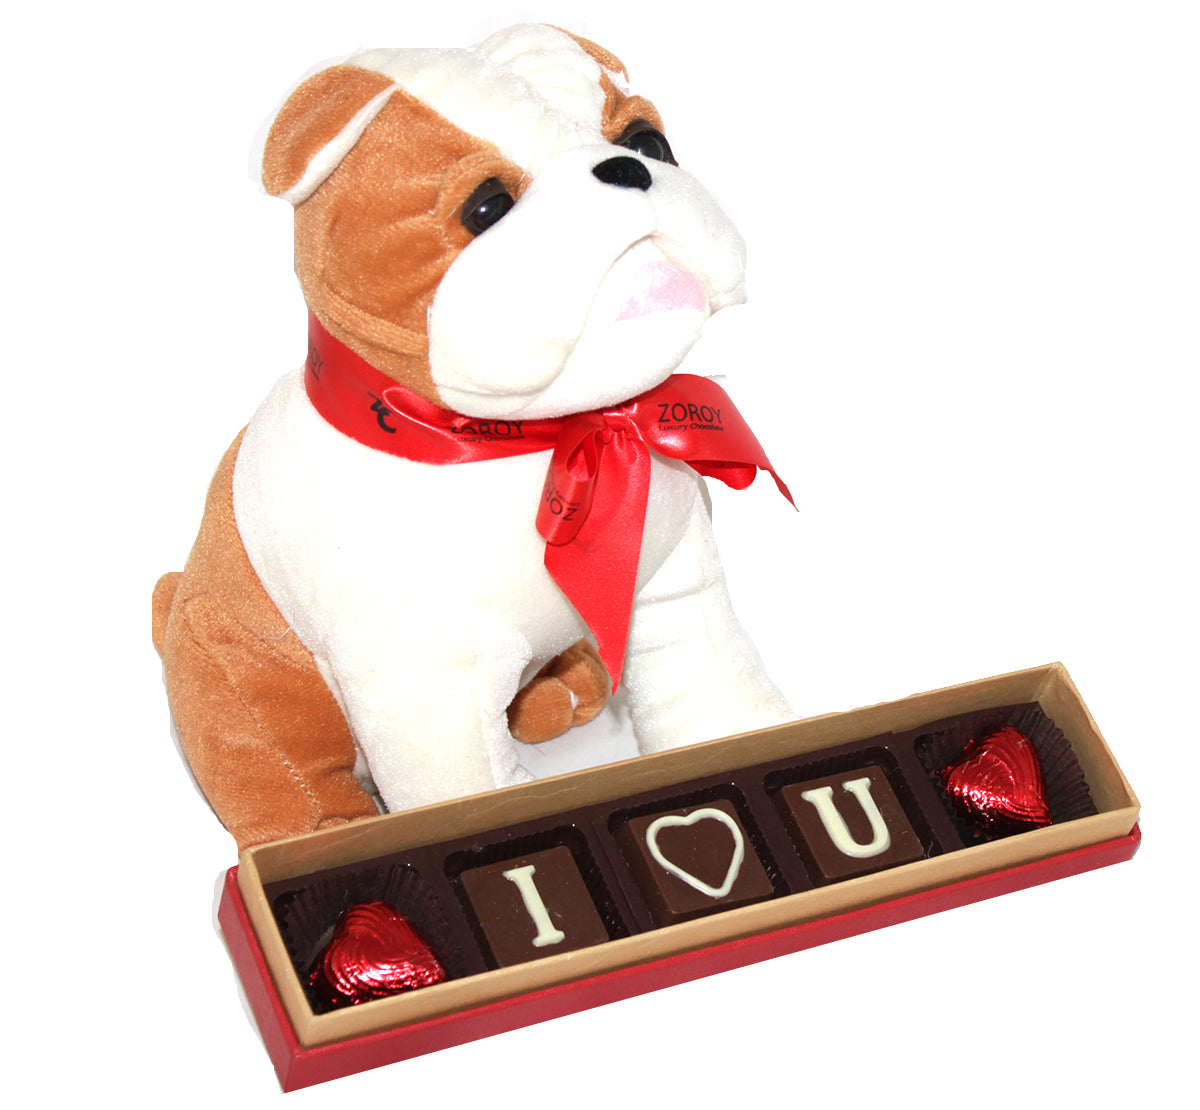 Puppy soft toy holding a "ILU" message chocolate box